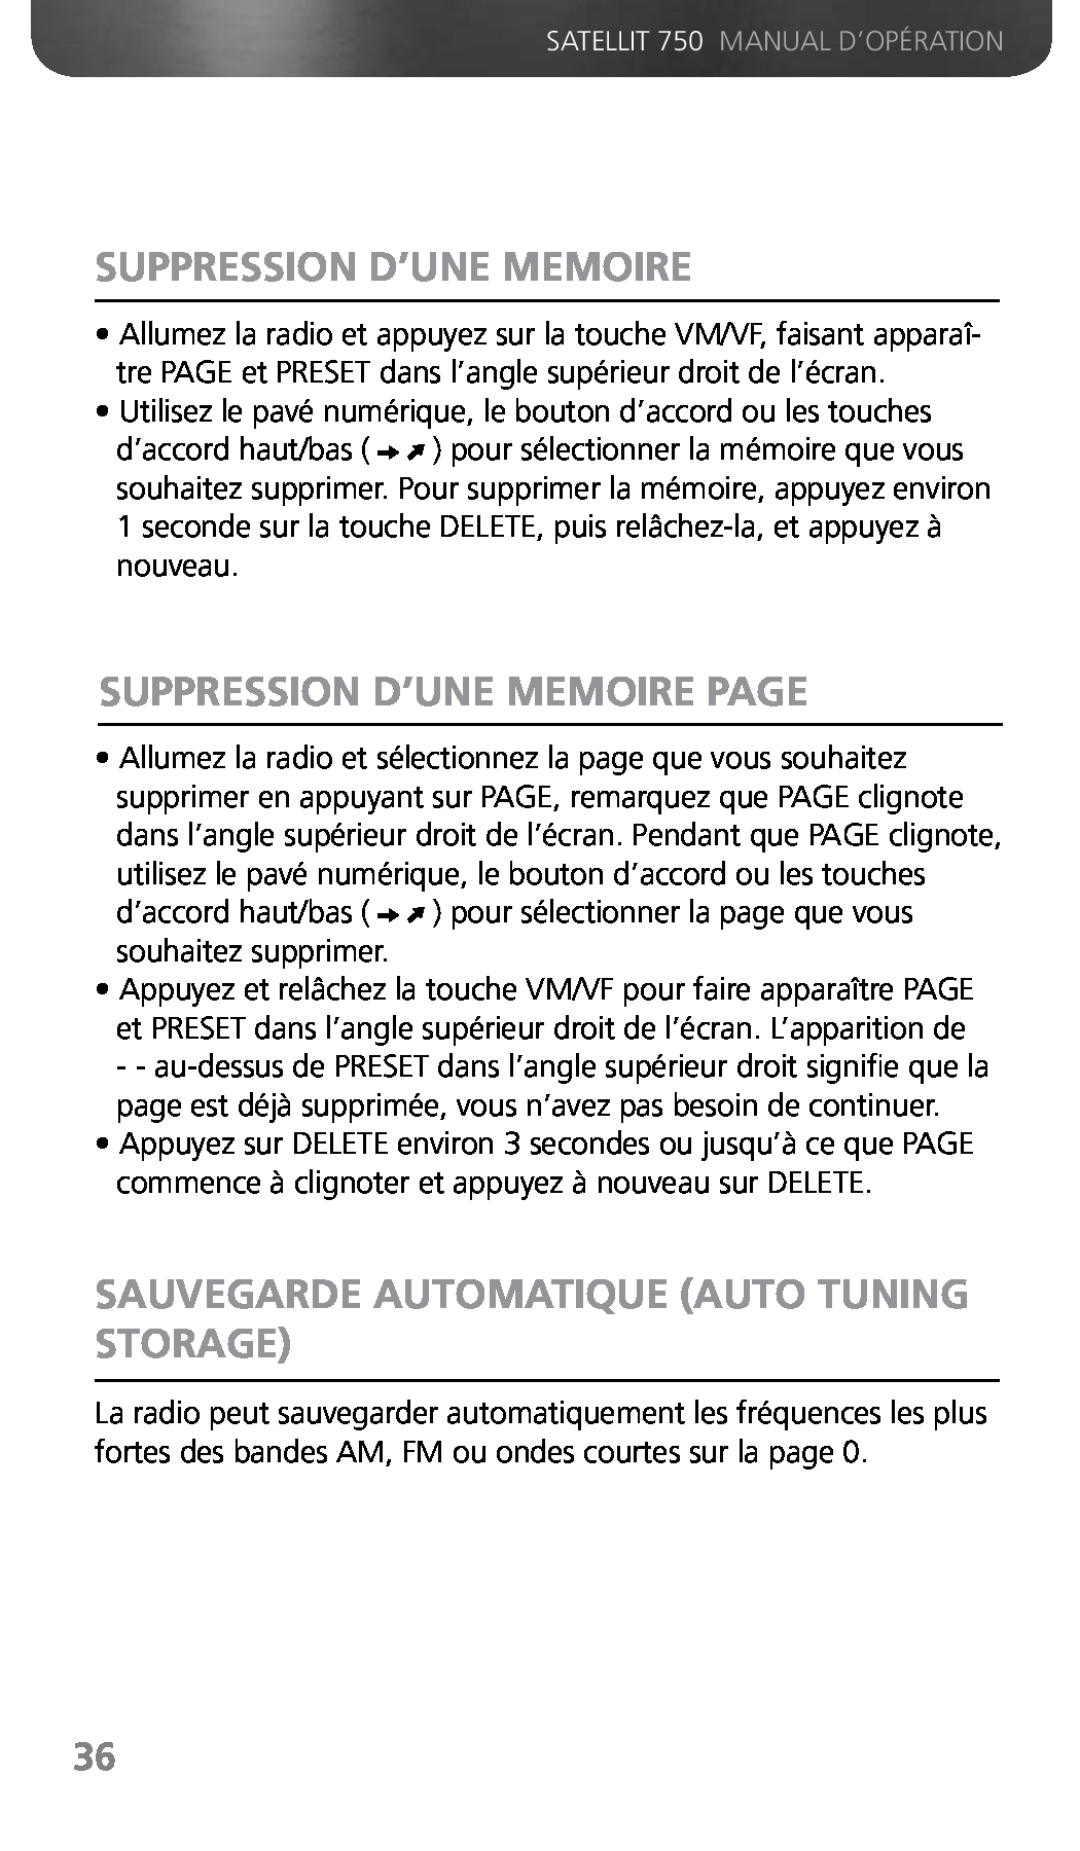 Grundig 750 owner manual Suppression D’Une Memoire Page, Sauvegarde Automatique Auto Tuning Storage 